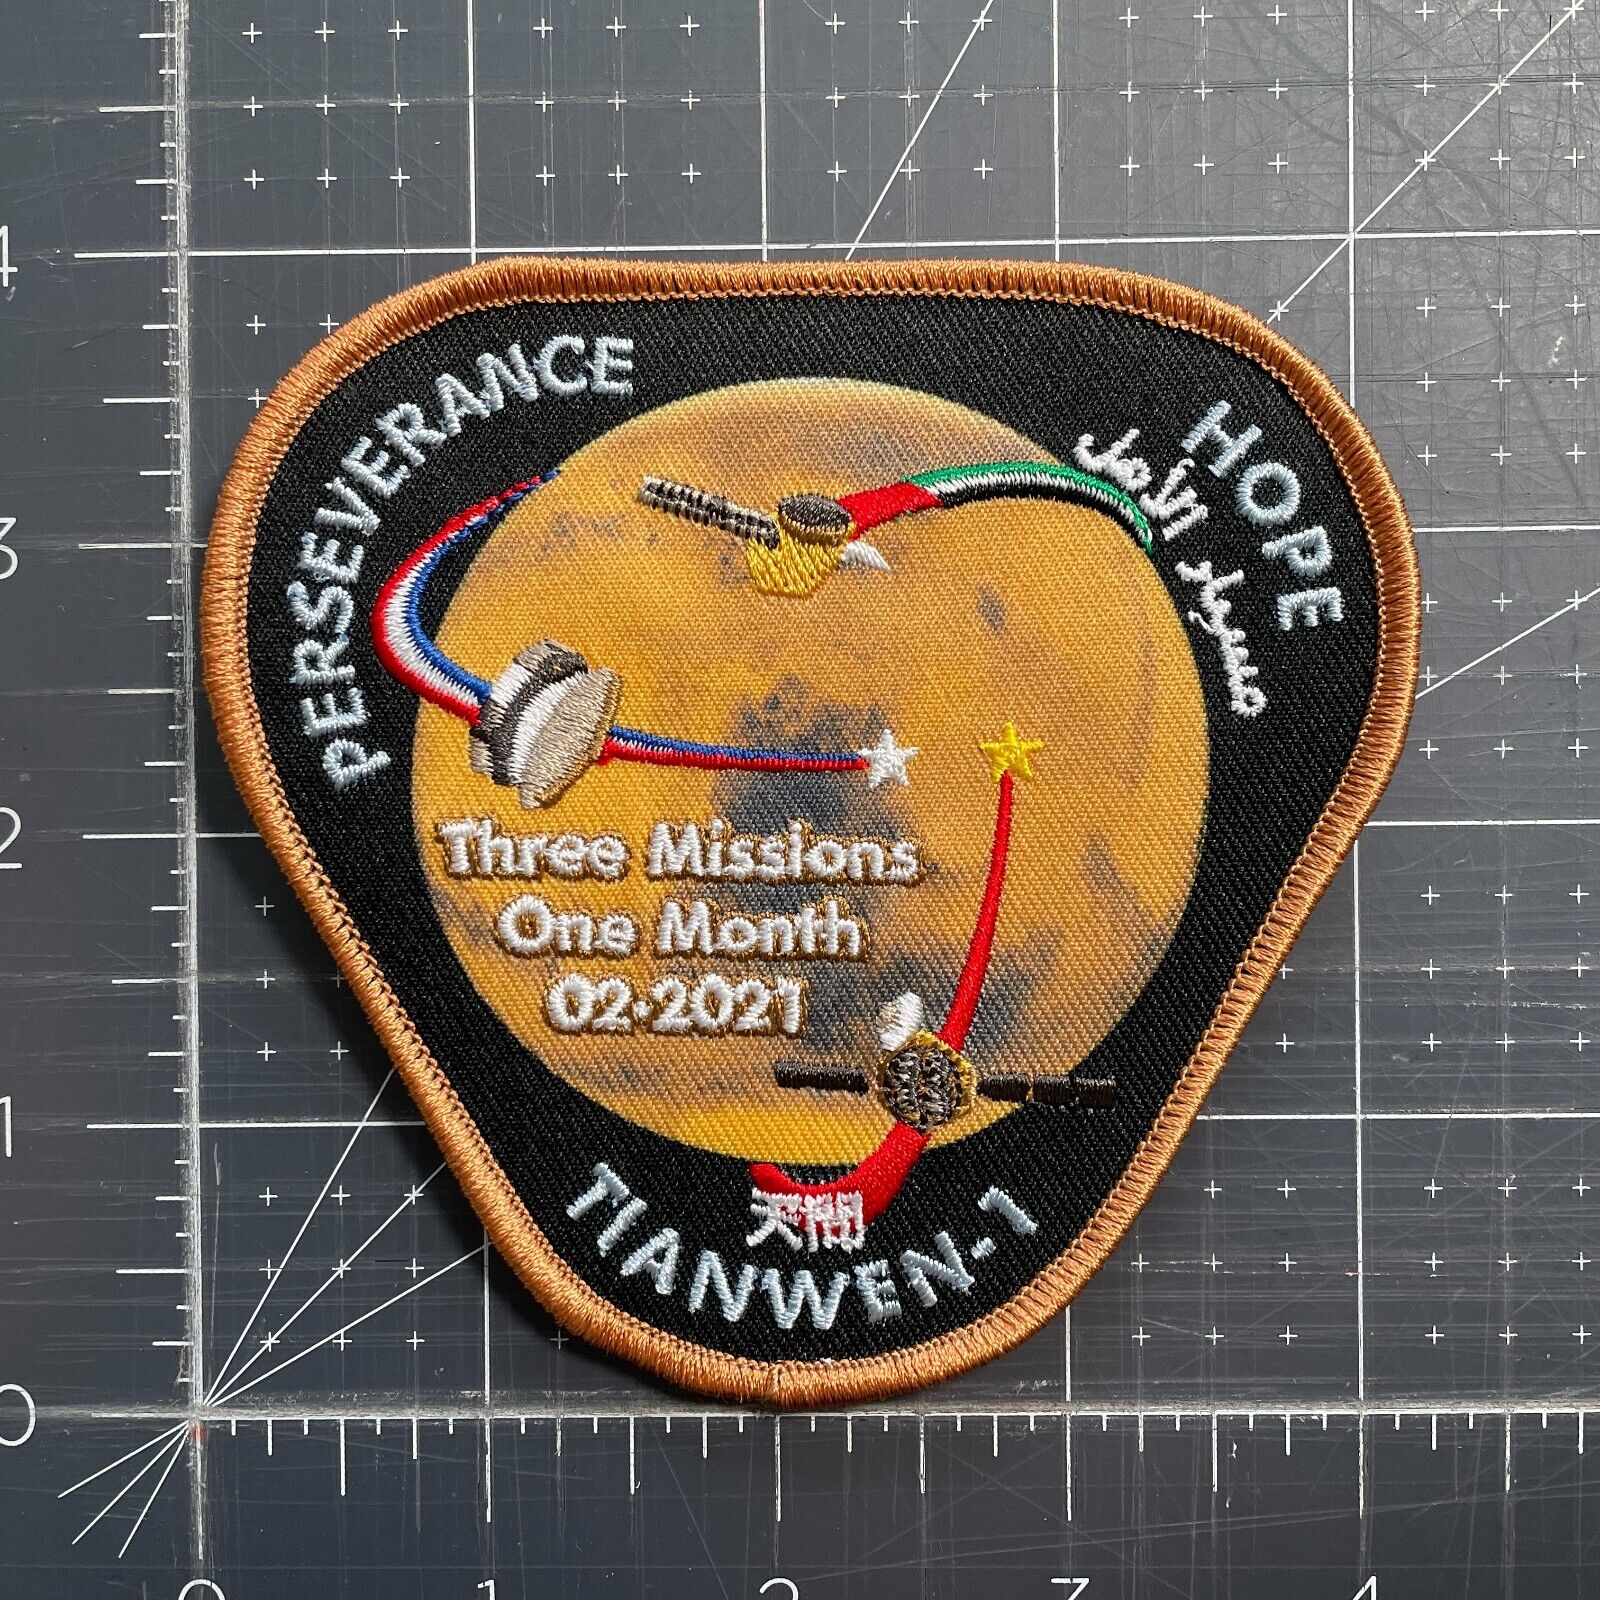 NASA Perseverance Tianwen-1 Hope Mars Landers commemorative patch